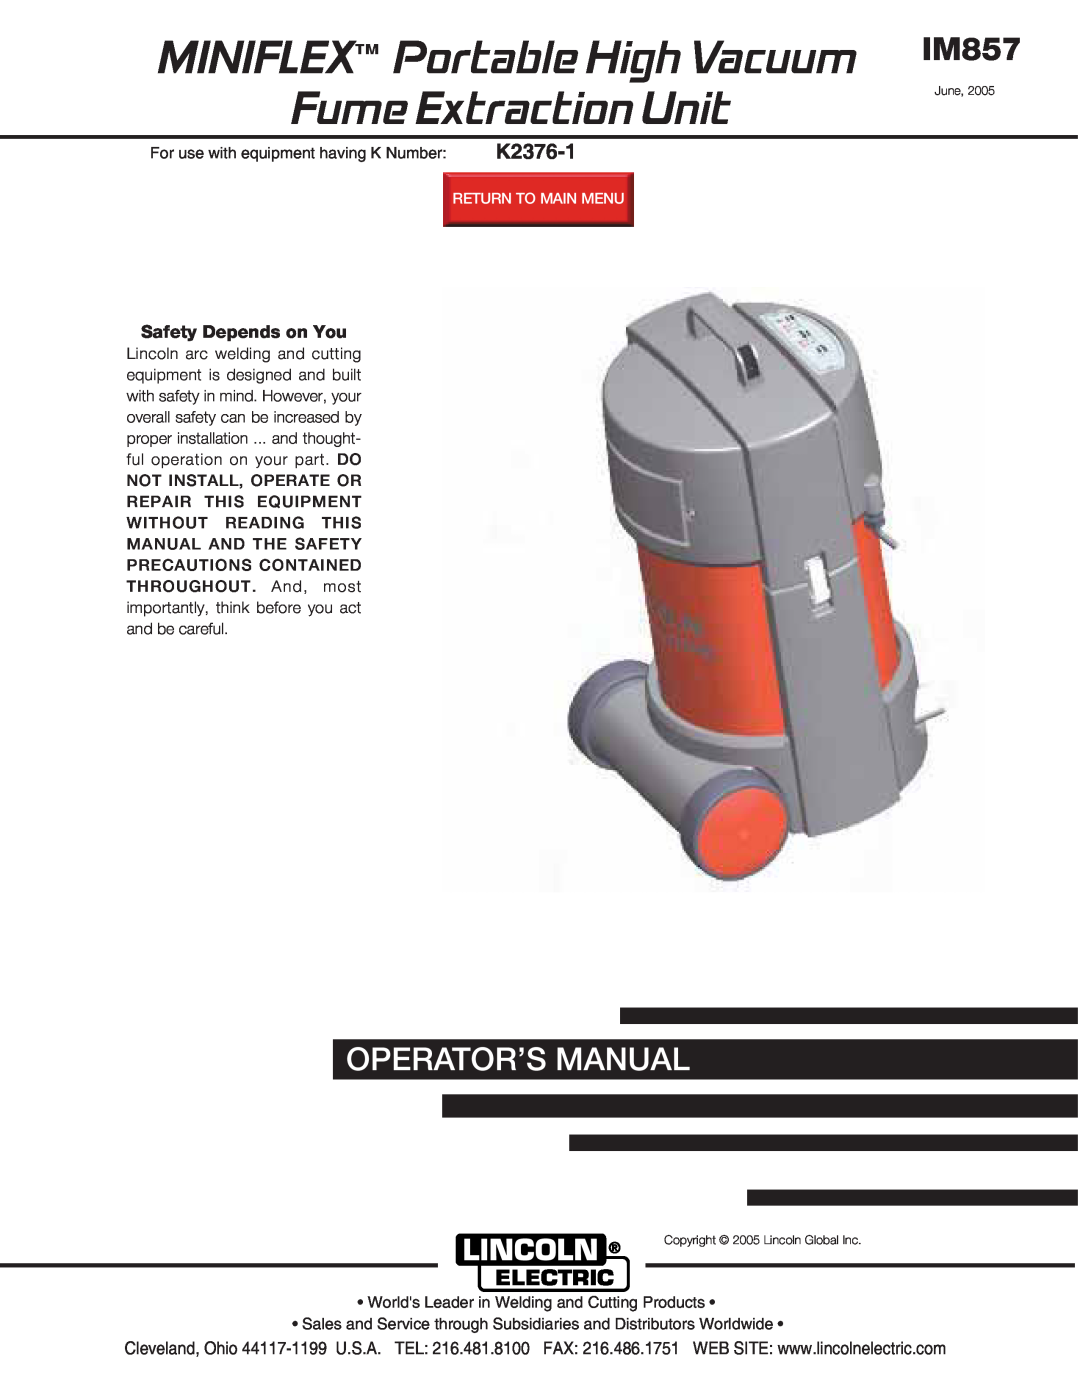 Lincoln Electric IM857 manual K2376-1, MINIFLEX Portable High Vacuum, Fume Extraction Unit, Operator’S Manual 